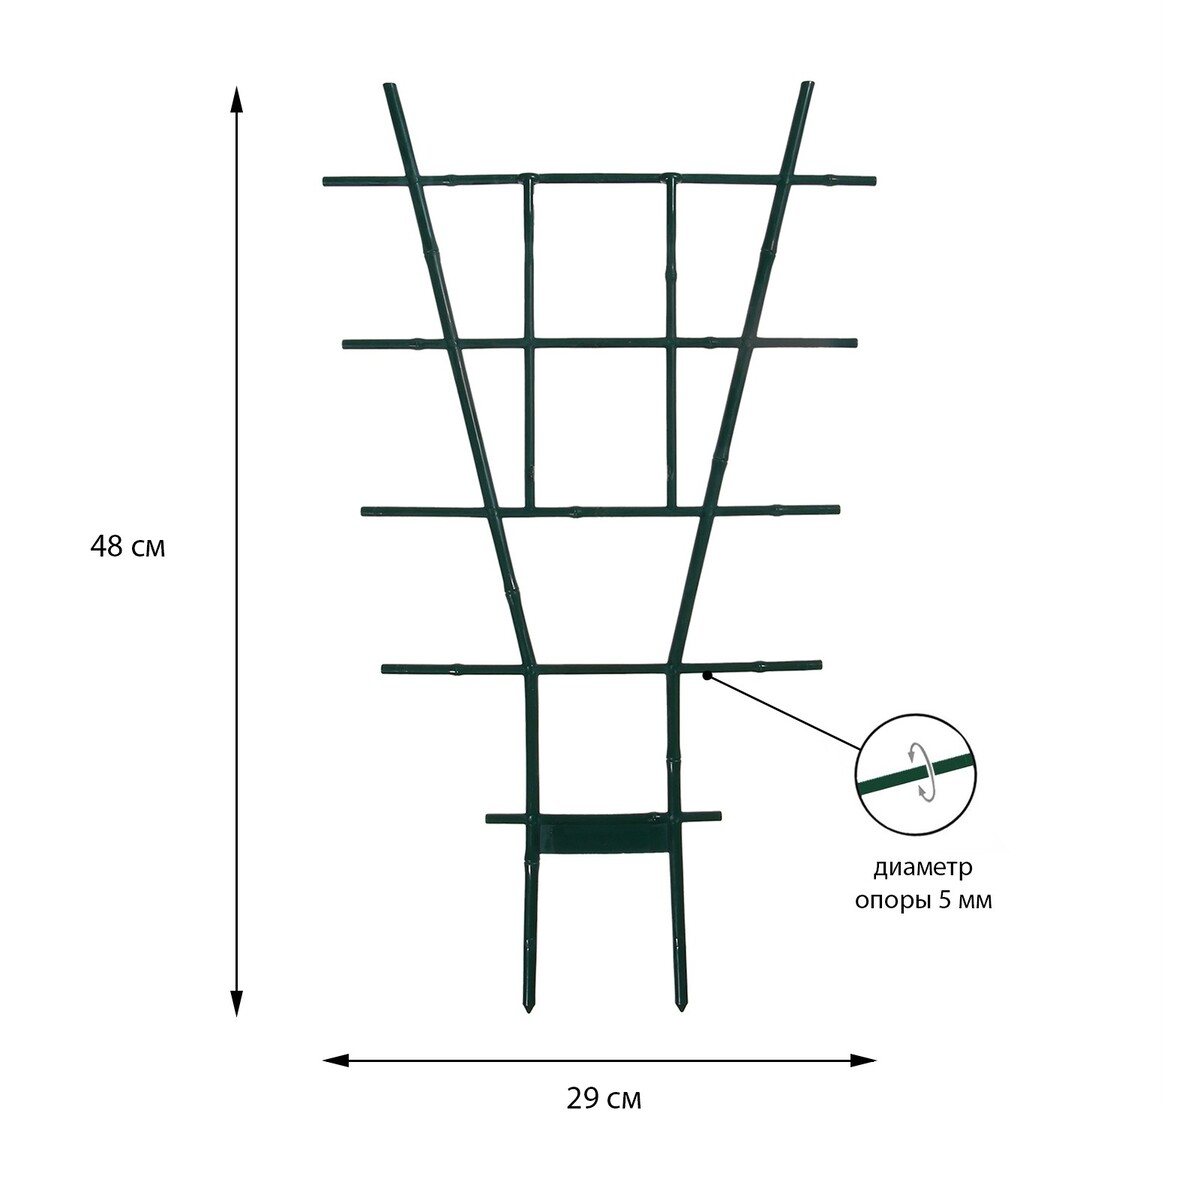 Шпалера, 48 × 29 × 0.5 см, пластик, зеленая, greengo зажим для растений набор 20 шт пластик greengo